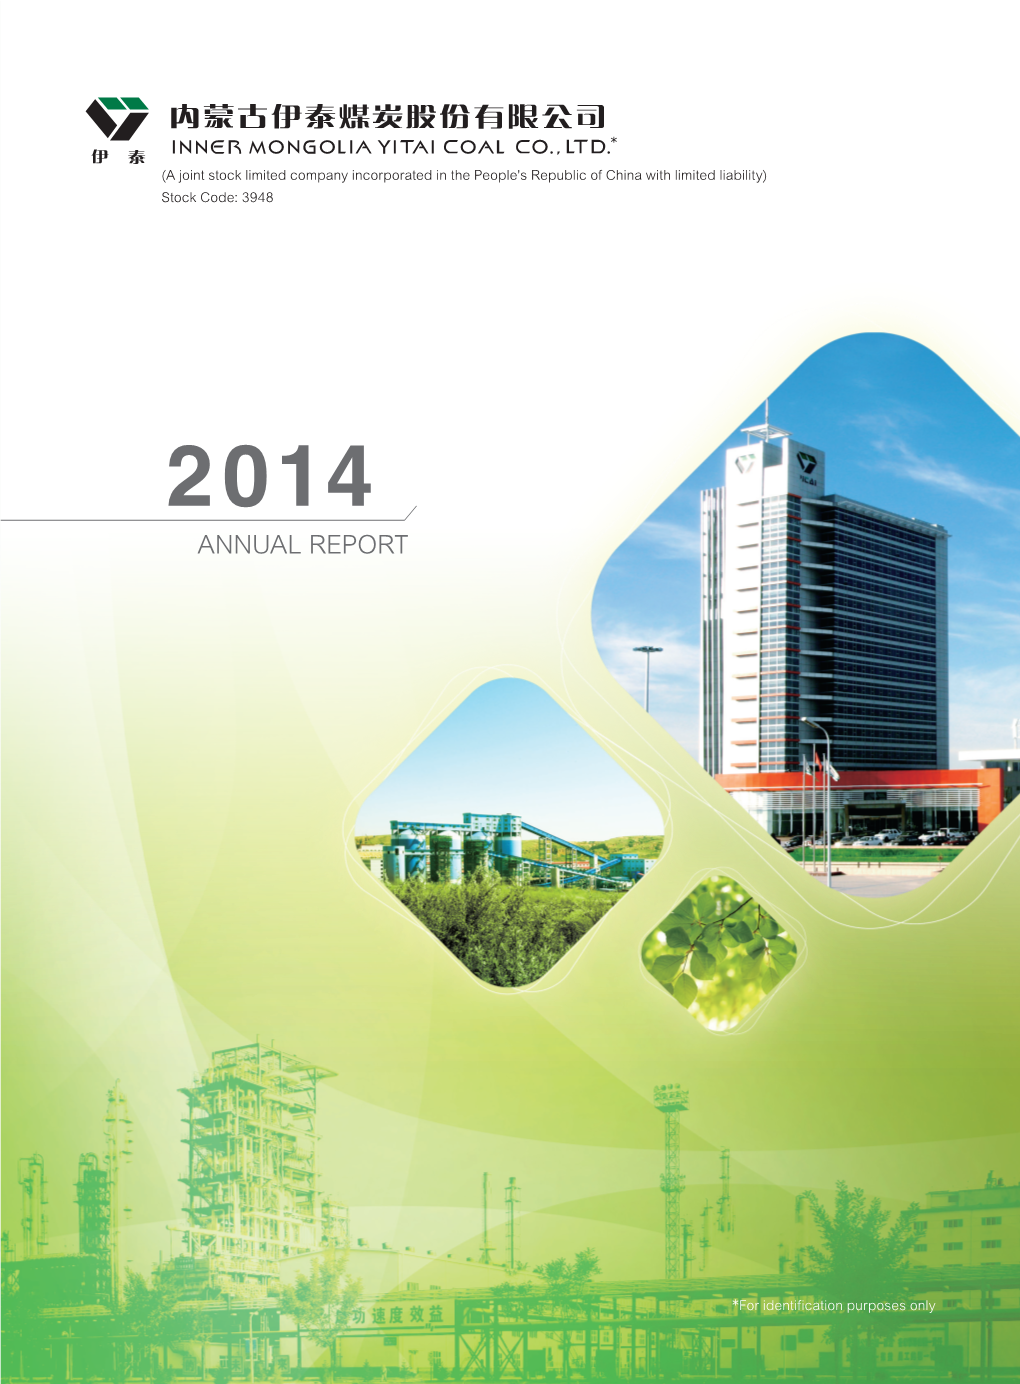 ANNUAL REPORT * Annual Report 2014 年度報告